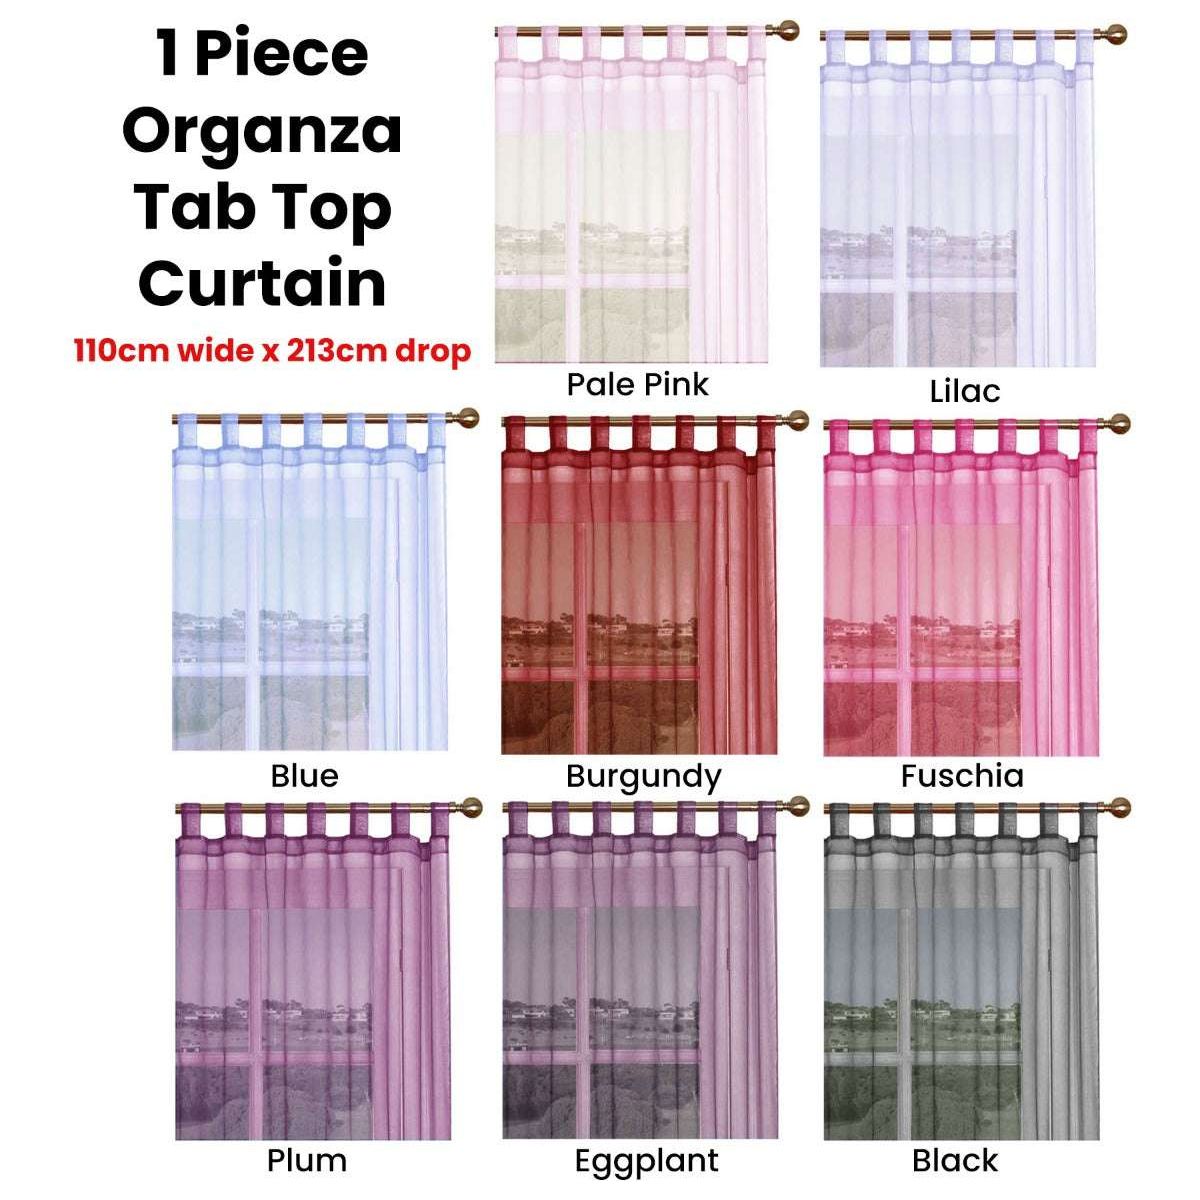 1 Piece Organza Tab Top Curtain 110 x 213 cm Black